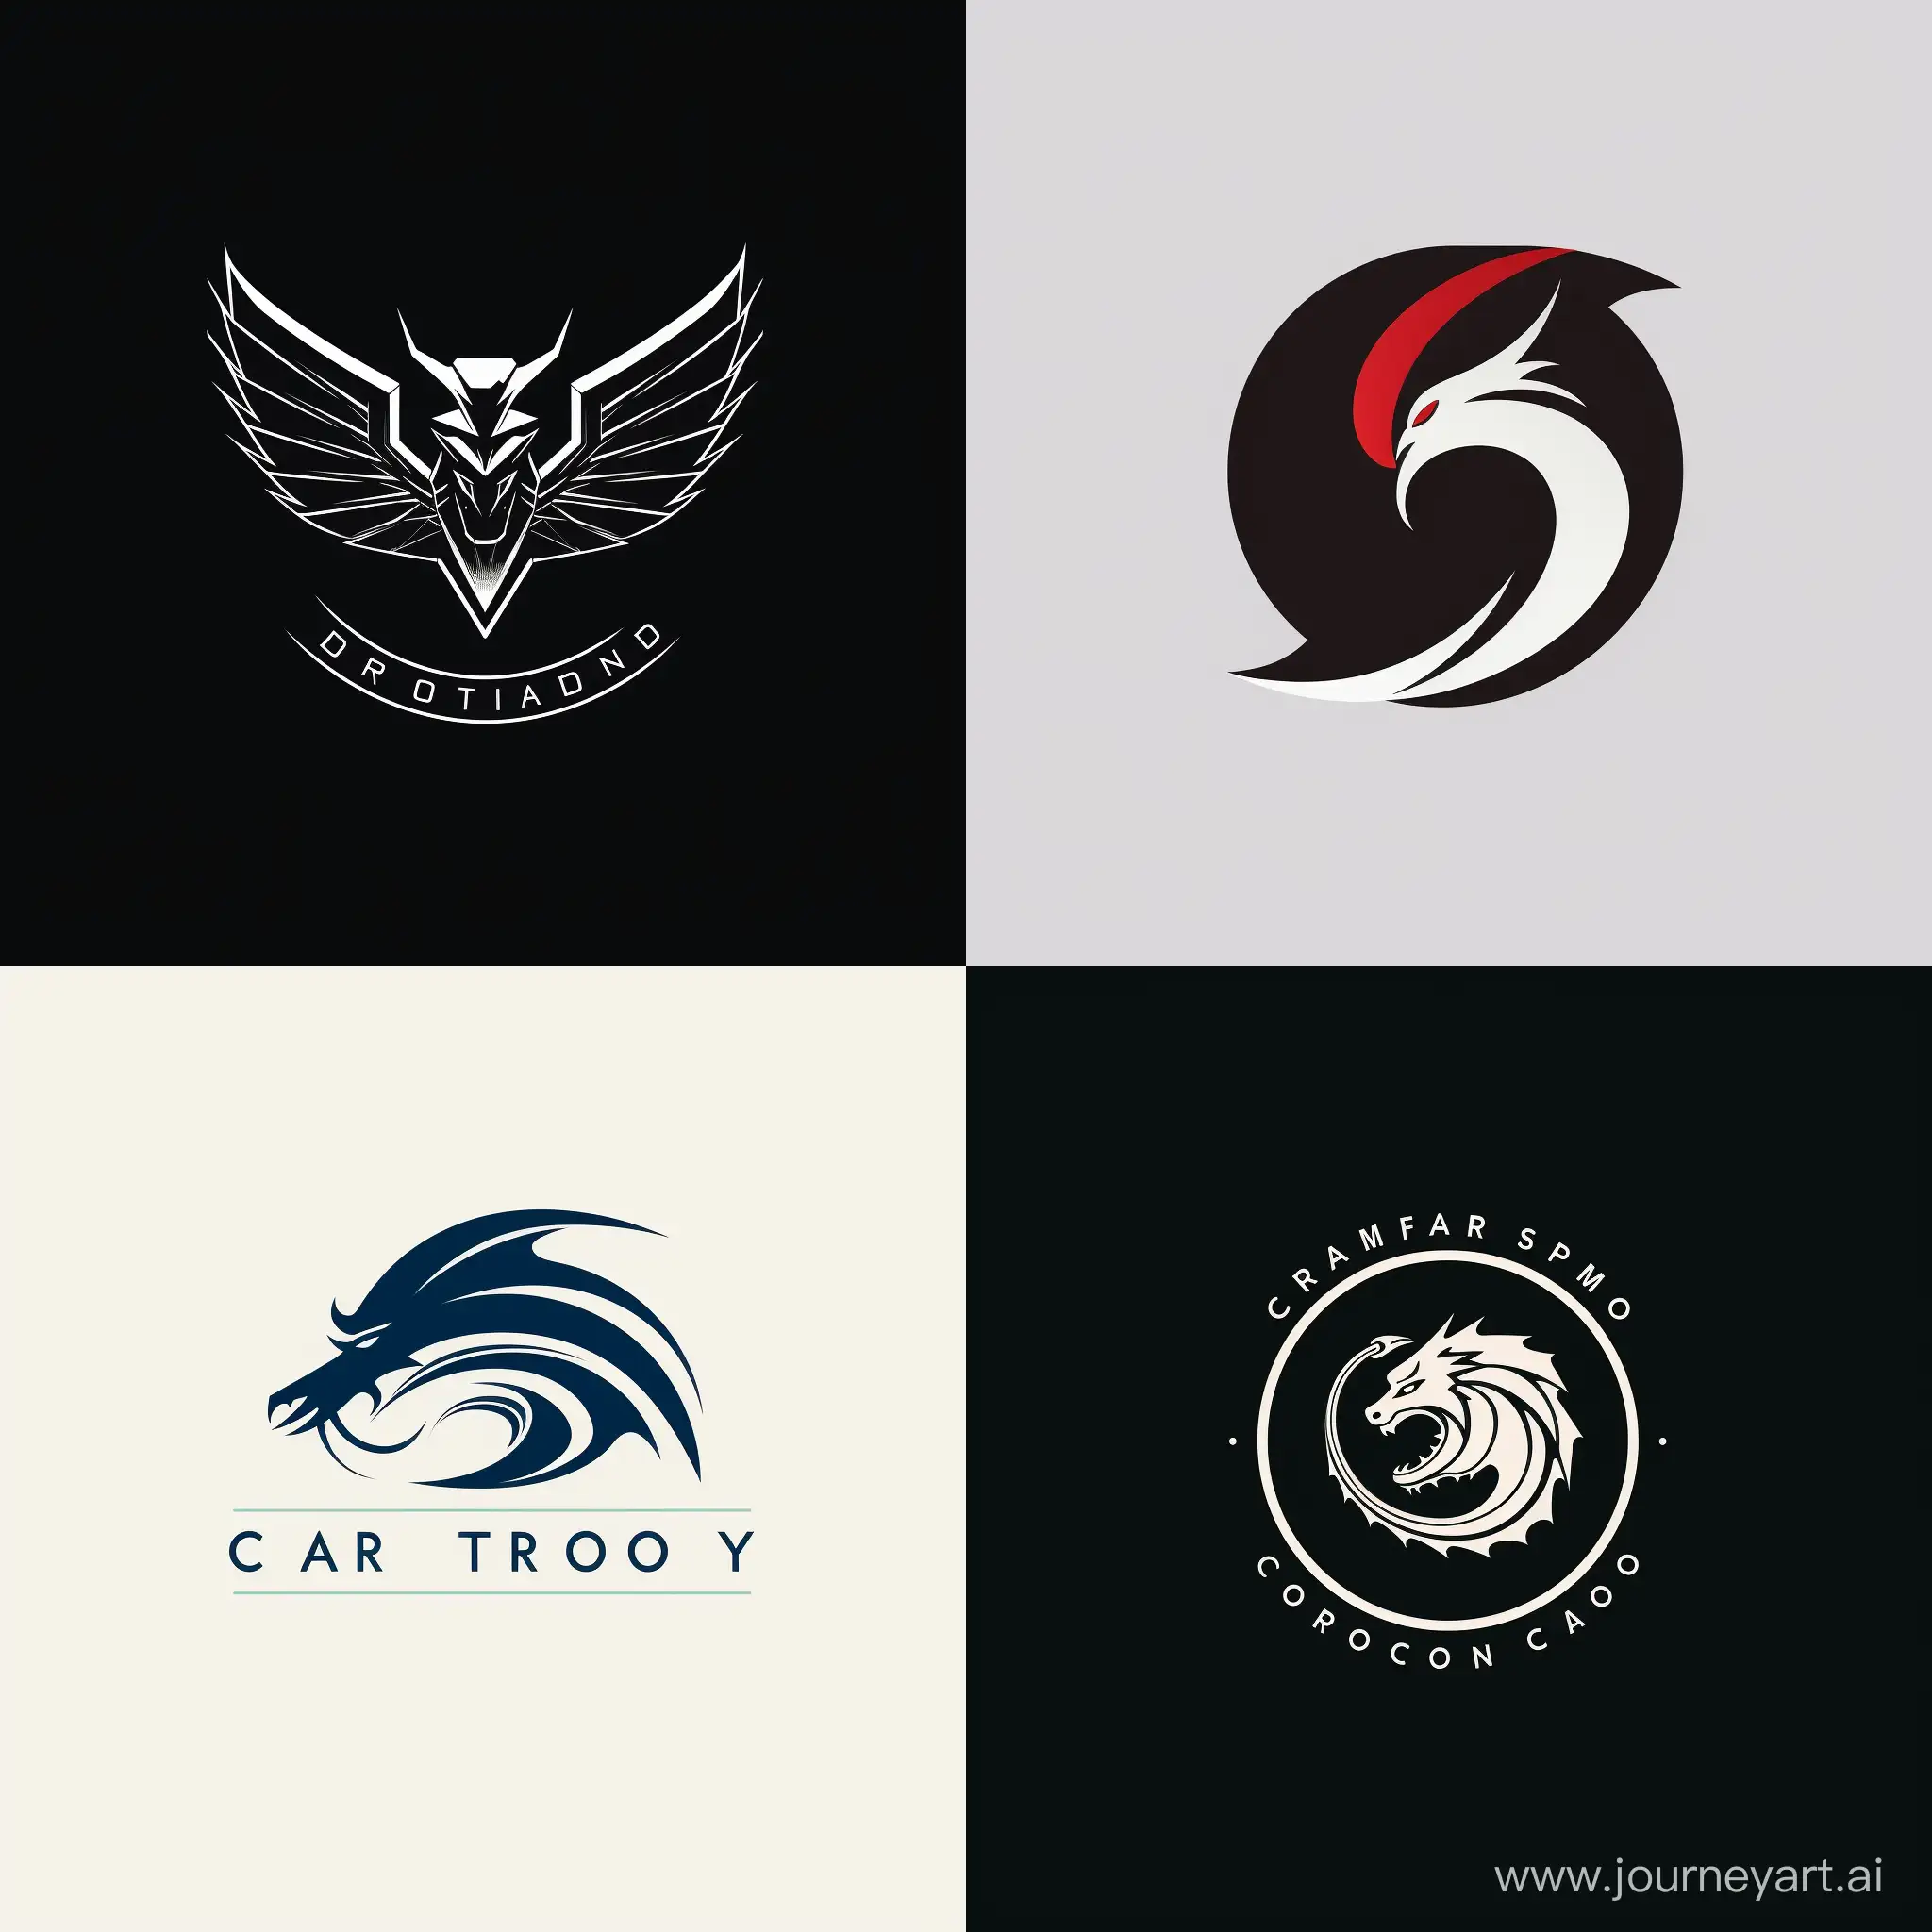 Minimalistic-Cargo-Transportation-Company-Logo-with-Dragon-Design